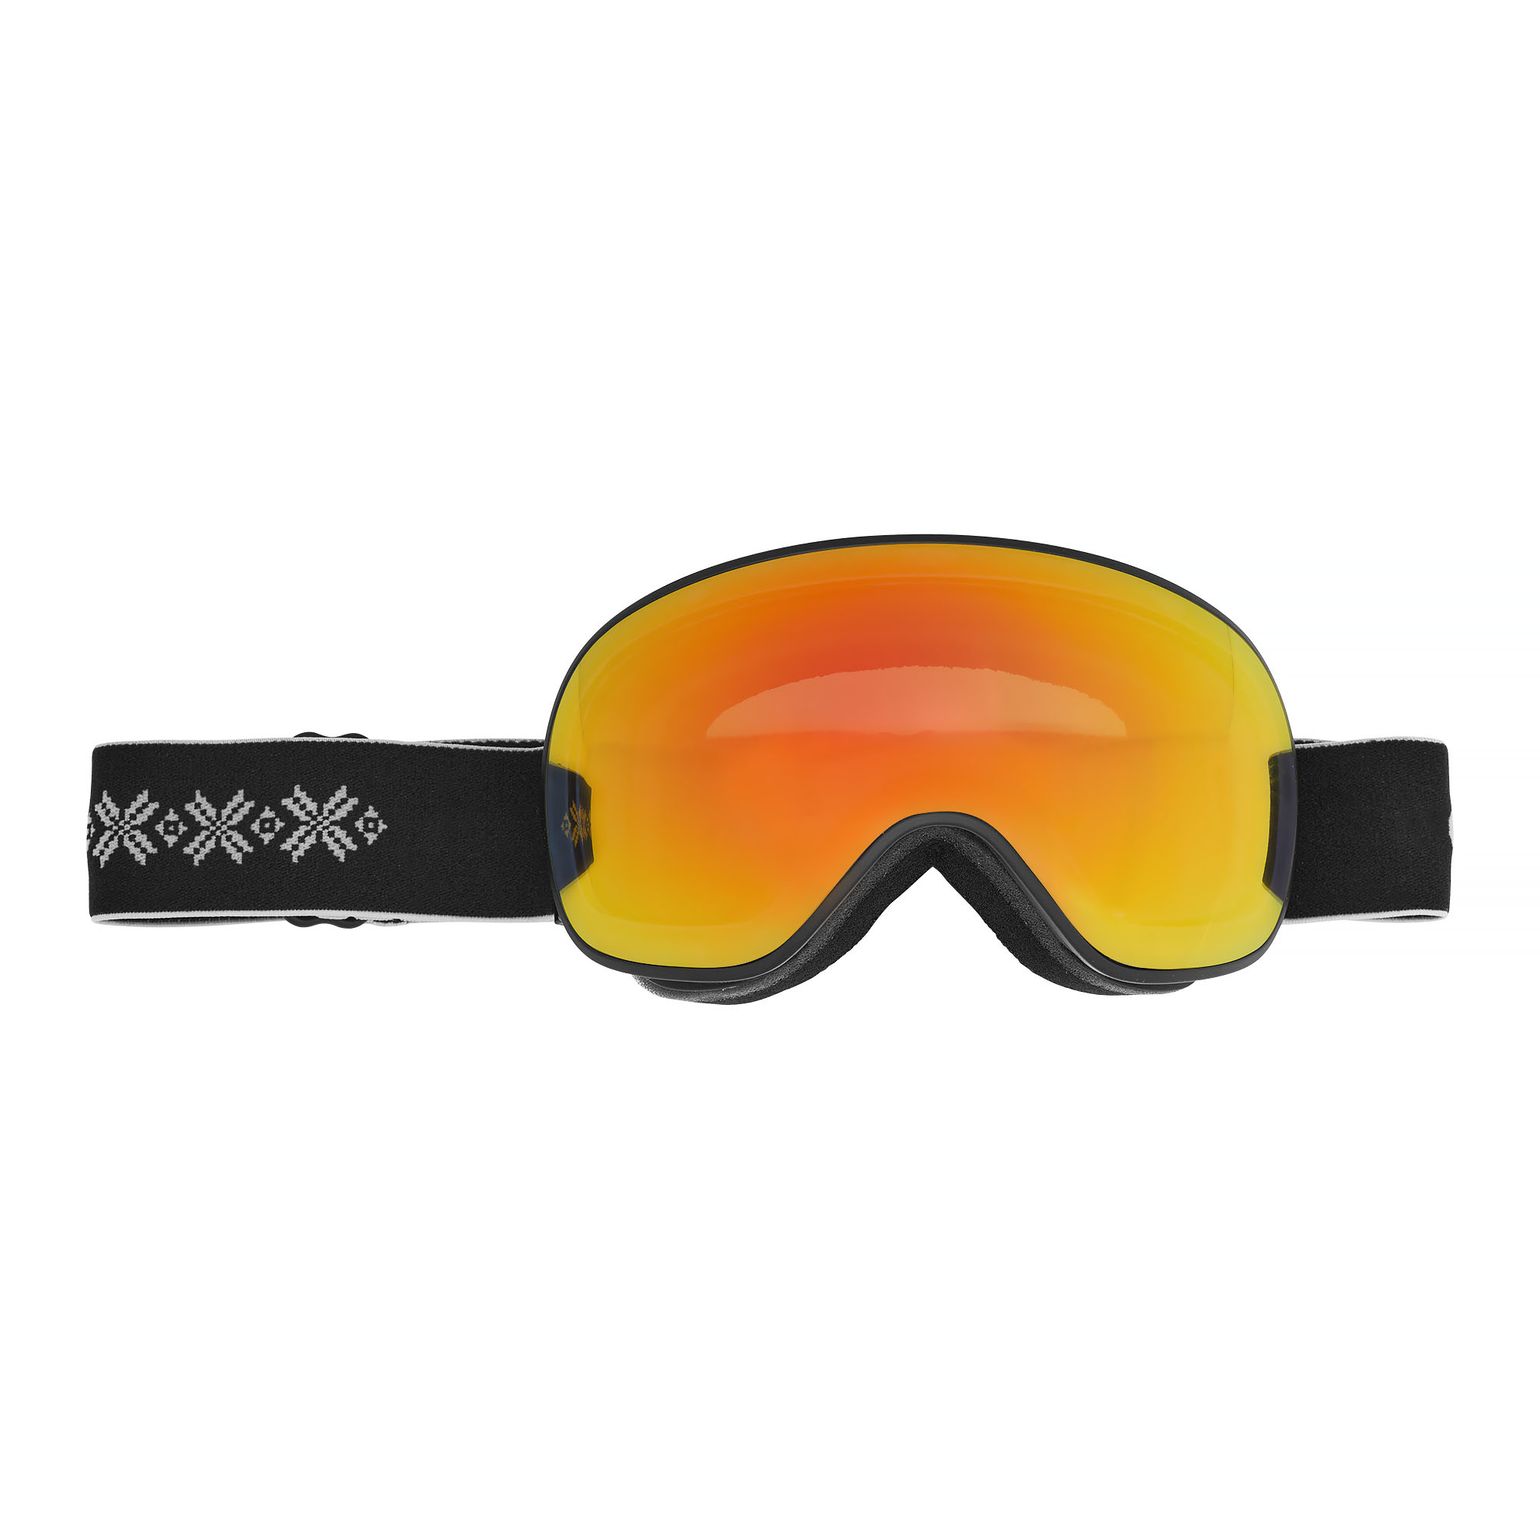 Gridarmor Kvittfell Ski Goggles Black